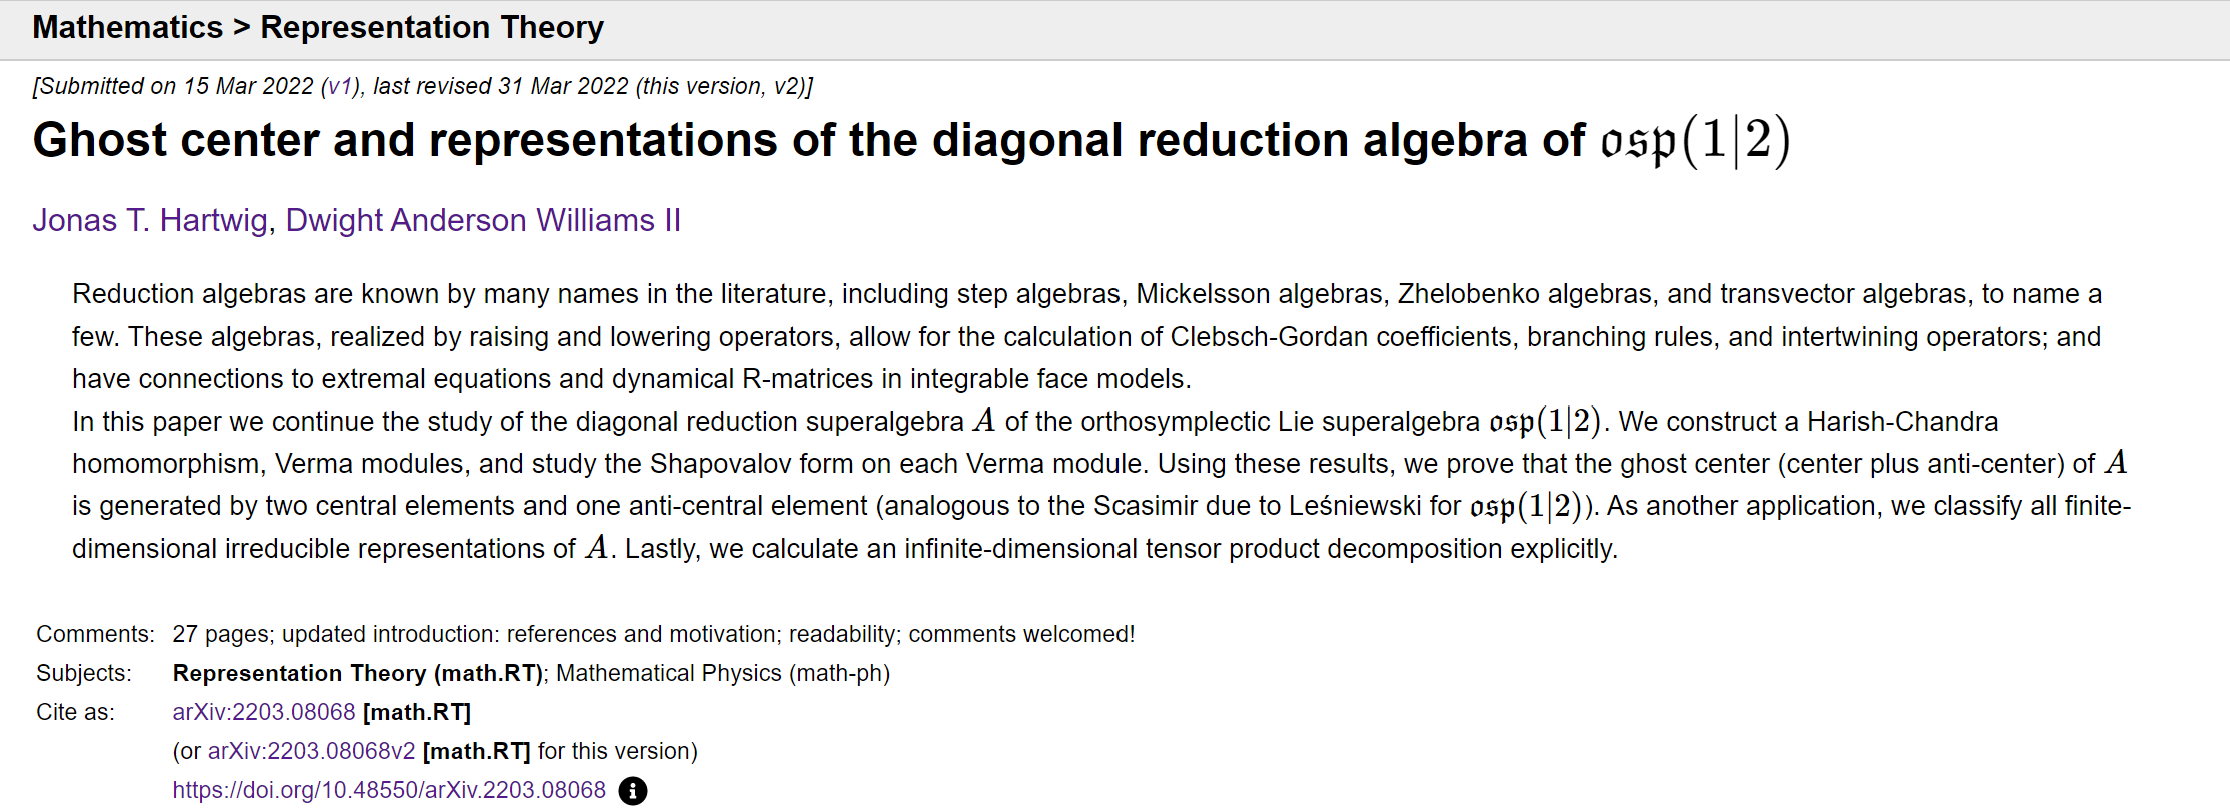 Preprint 2: Ghost center and representations of the diagonal reduction algebra of osp(1|2)